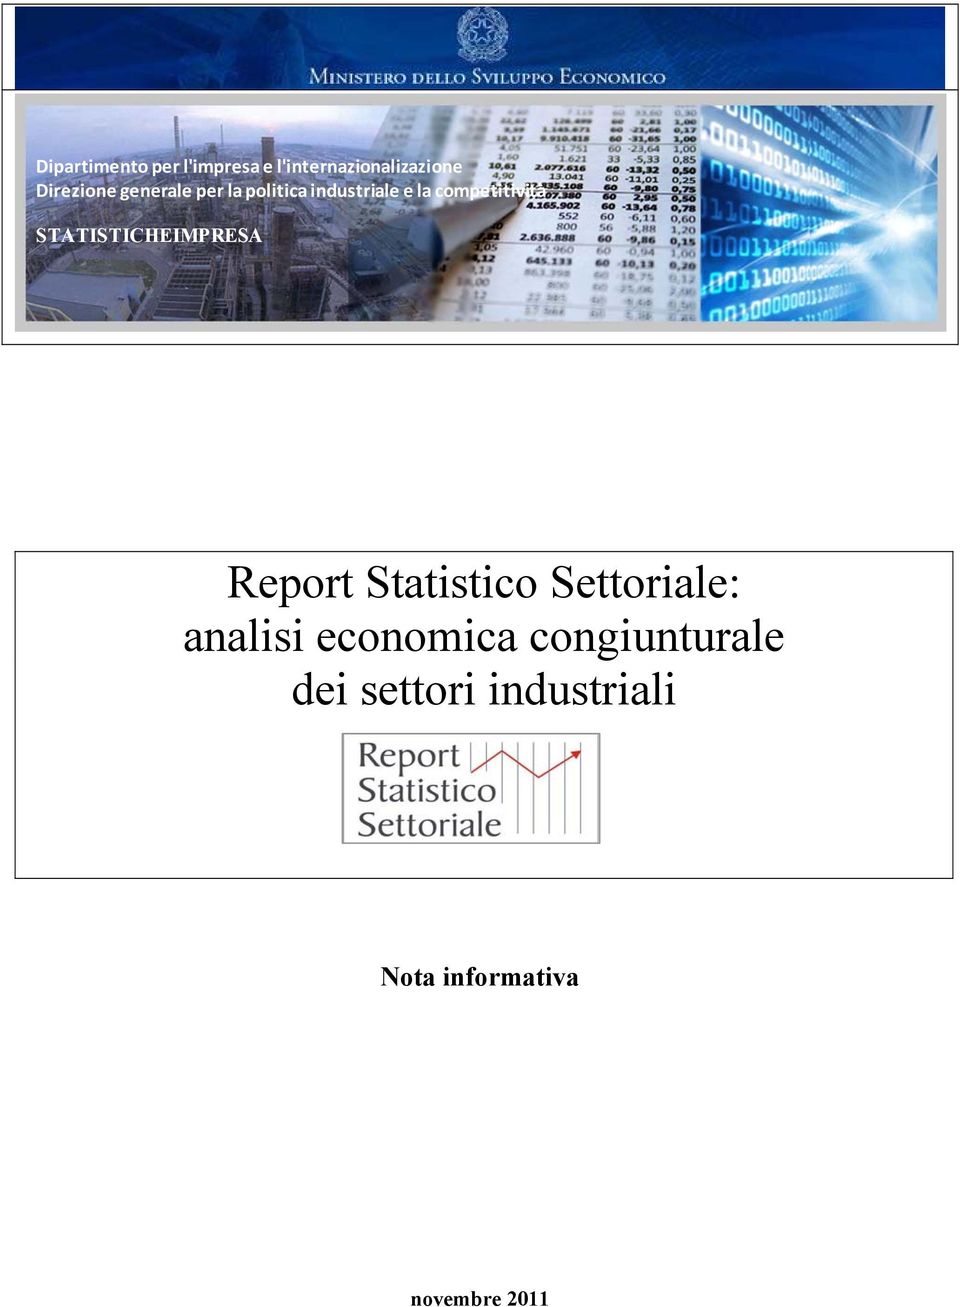 STATISTICHEIMPRESA Report Statistico Settoriale: analisi